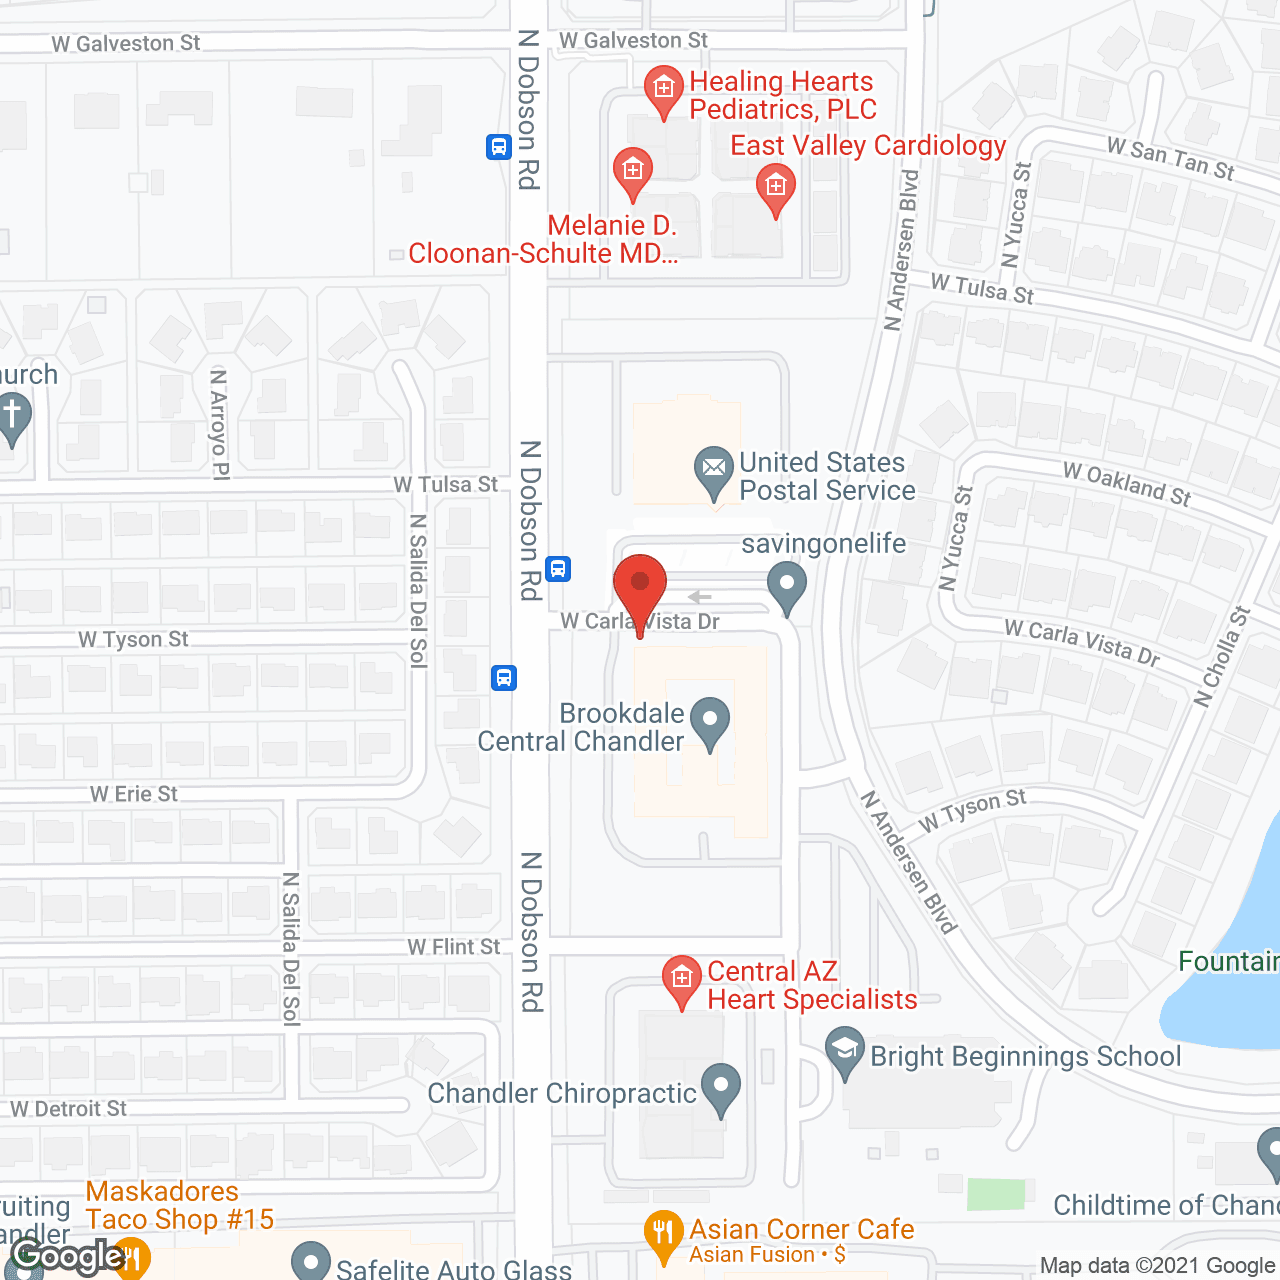 Brookdale Central Chandler in google map